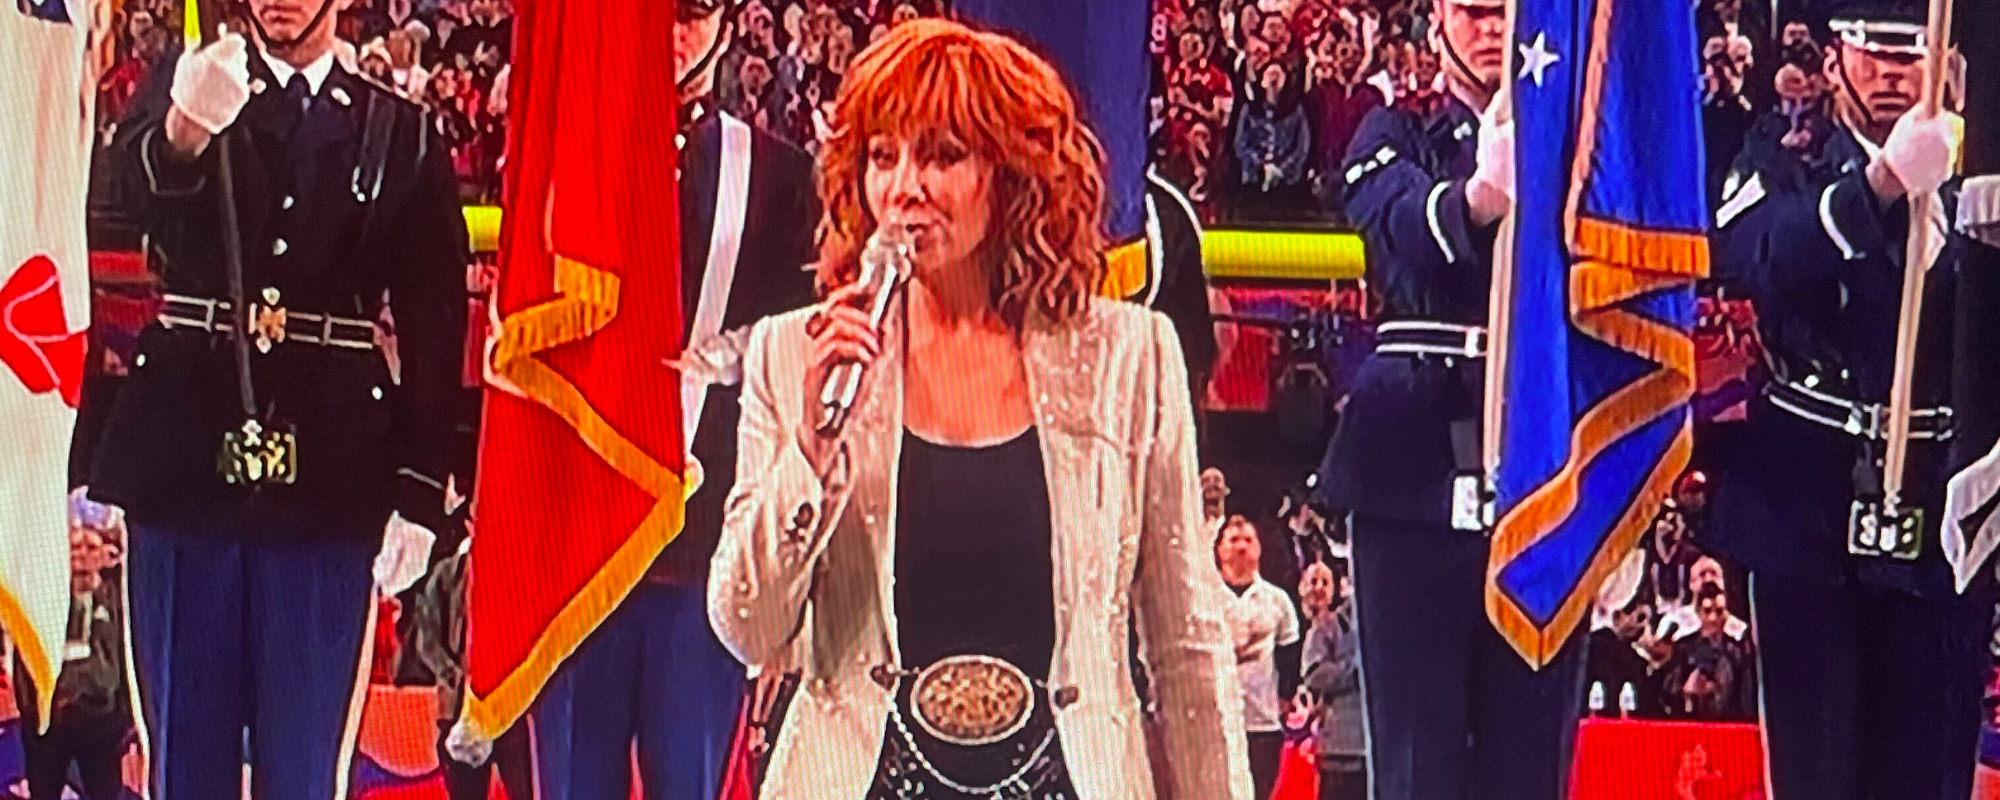 Reba McEntire’s Breathtaking National Anthem  Performance Has Super Bowl Fans Feeling Extra Patriotic